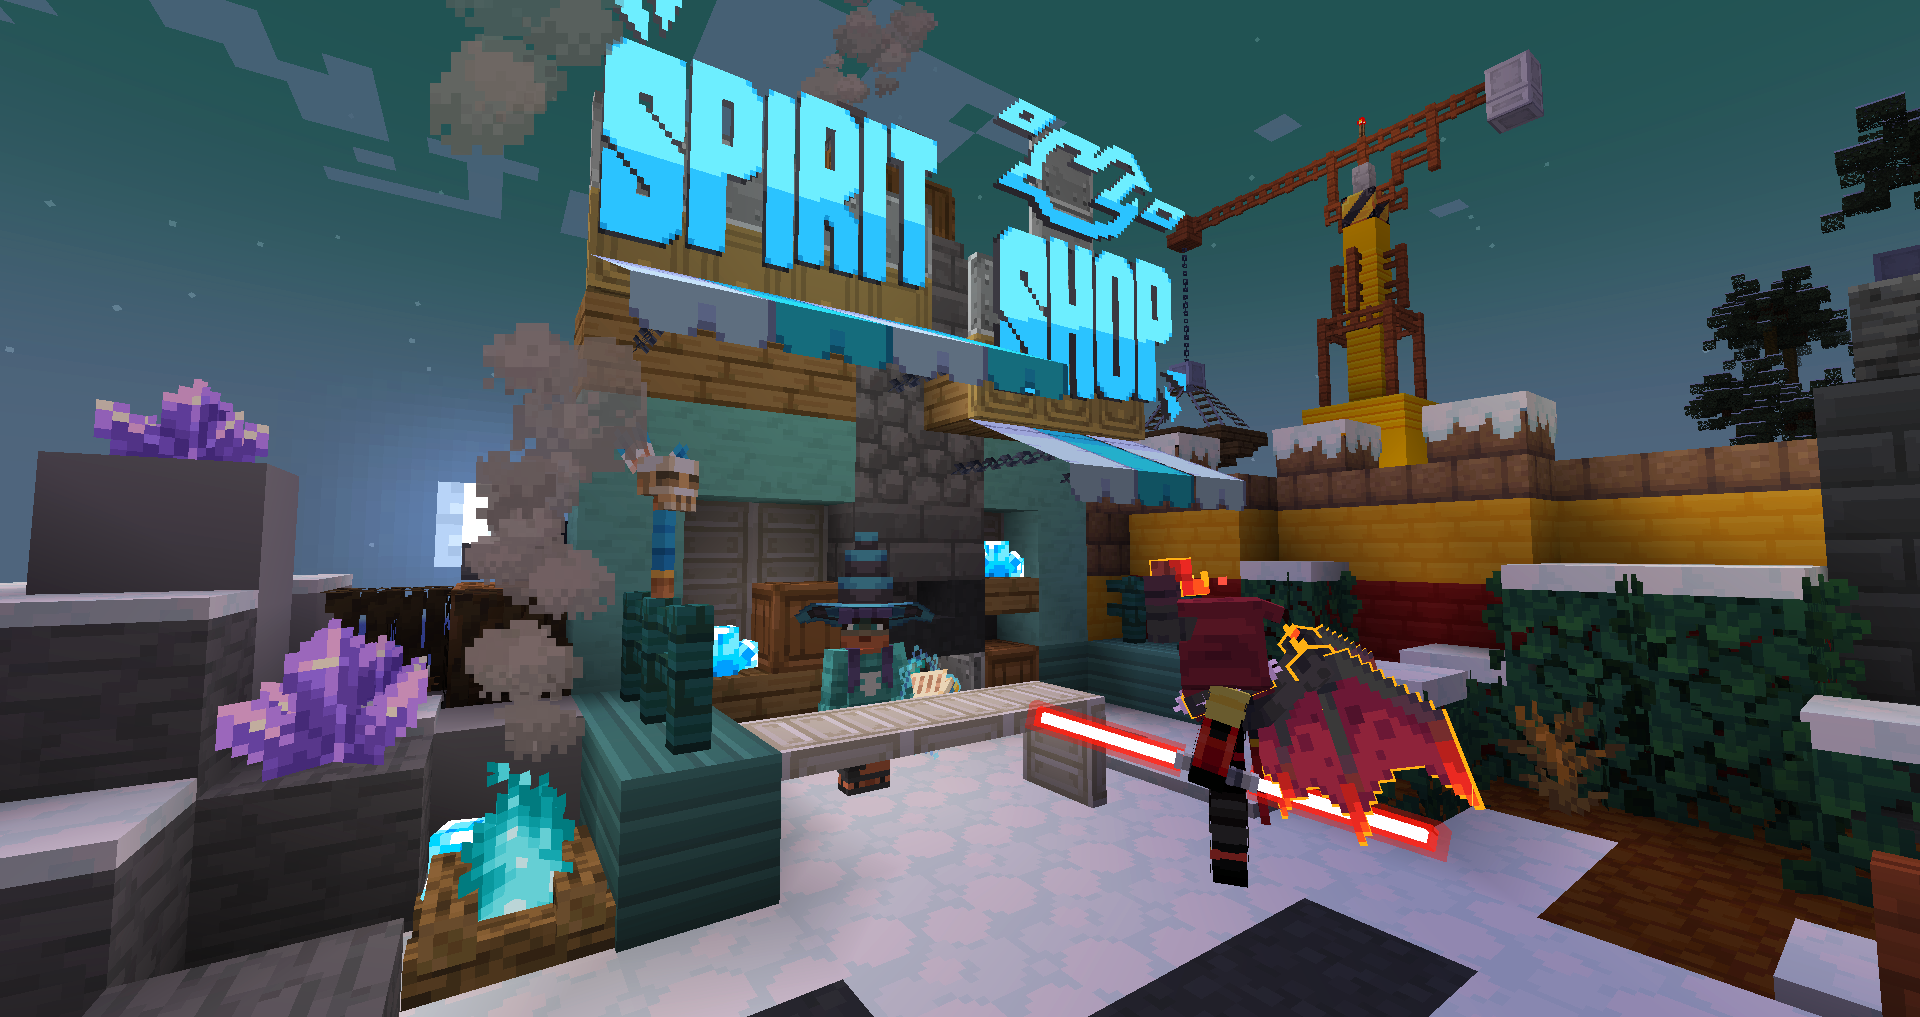 Spirit-Shop.png